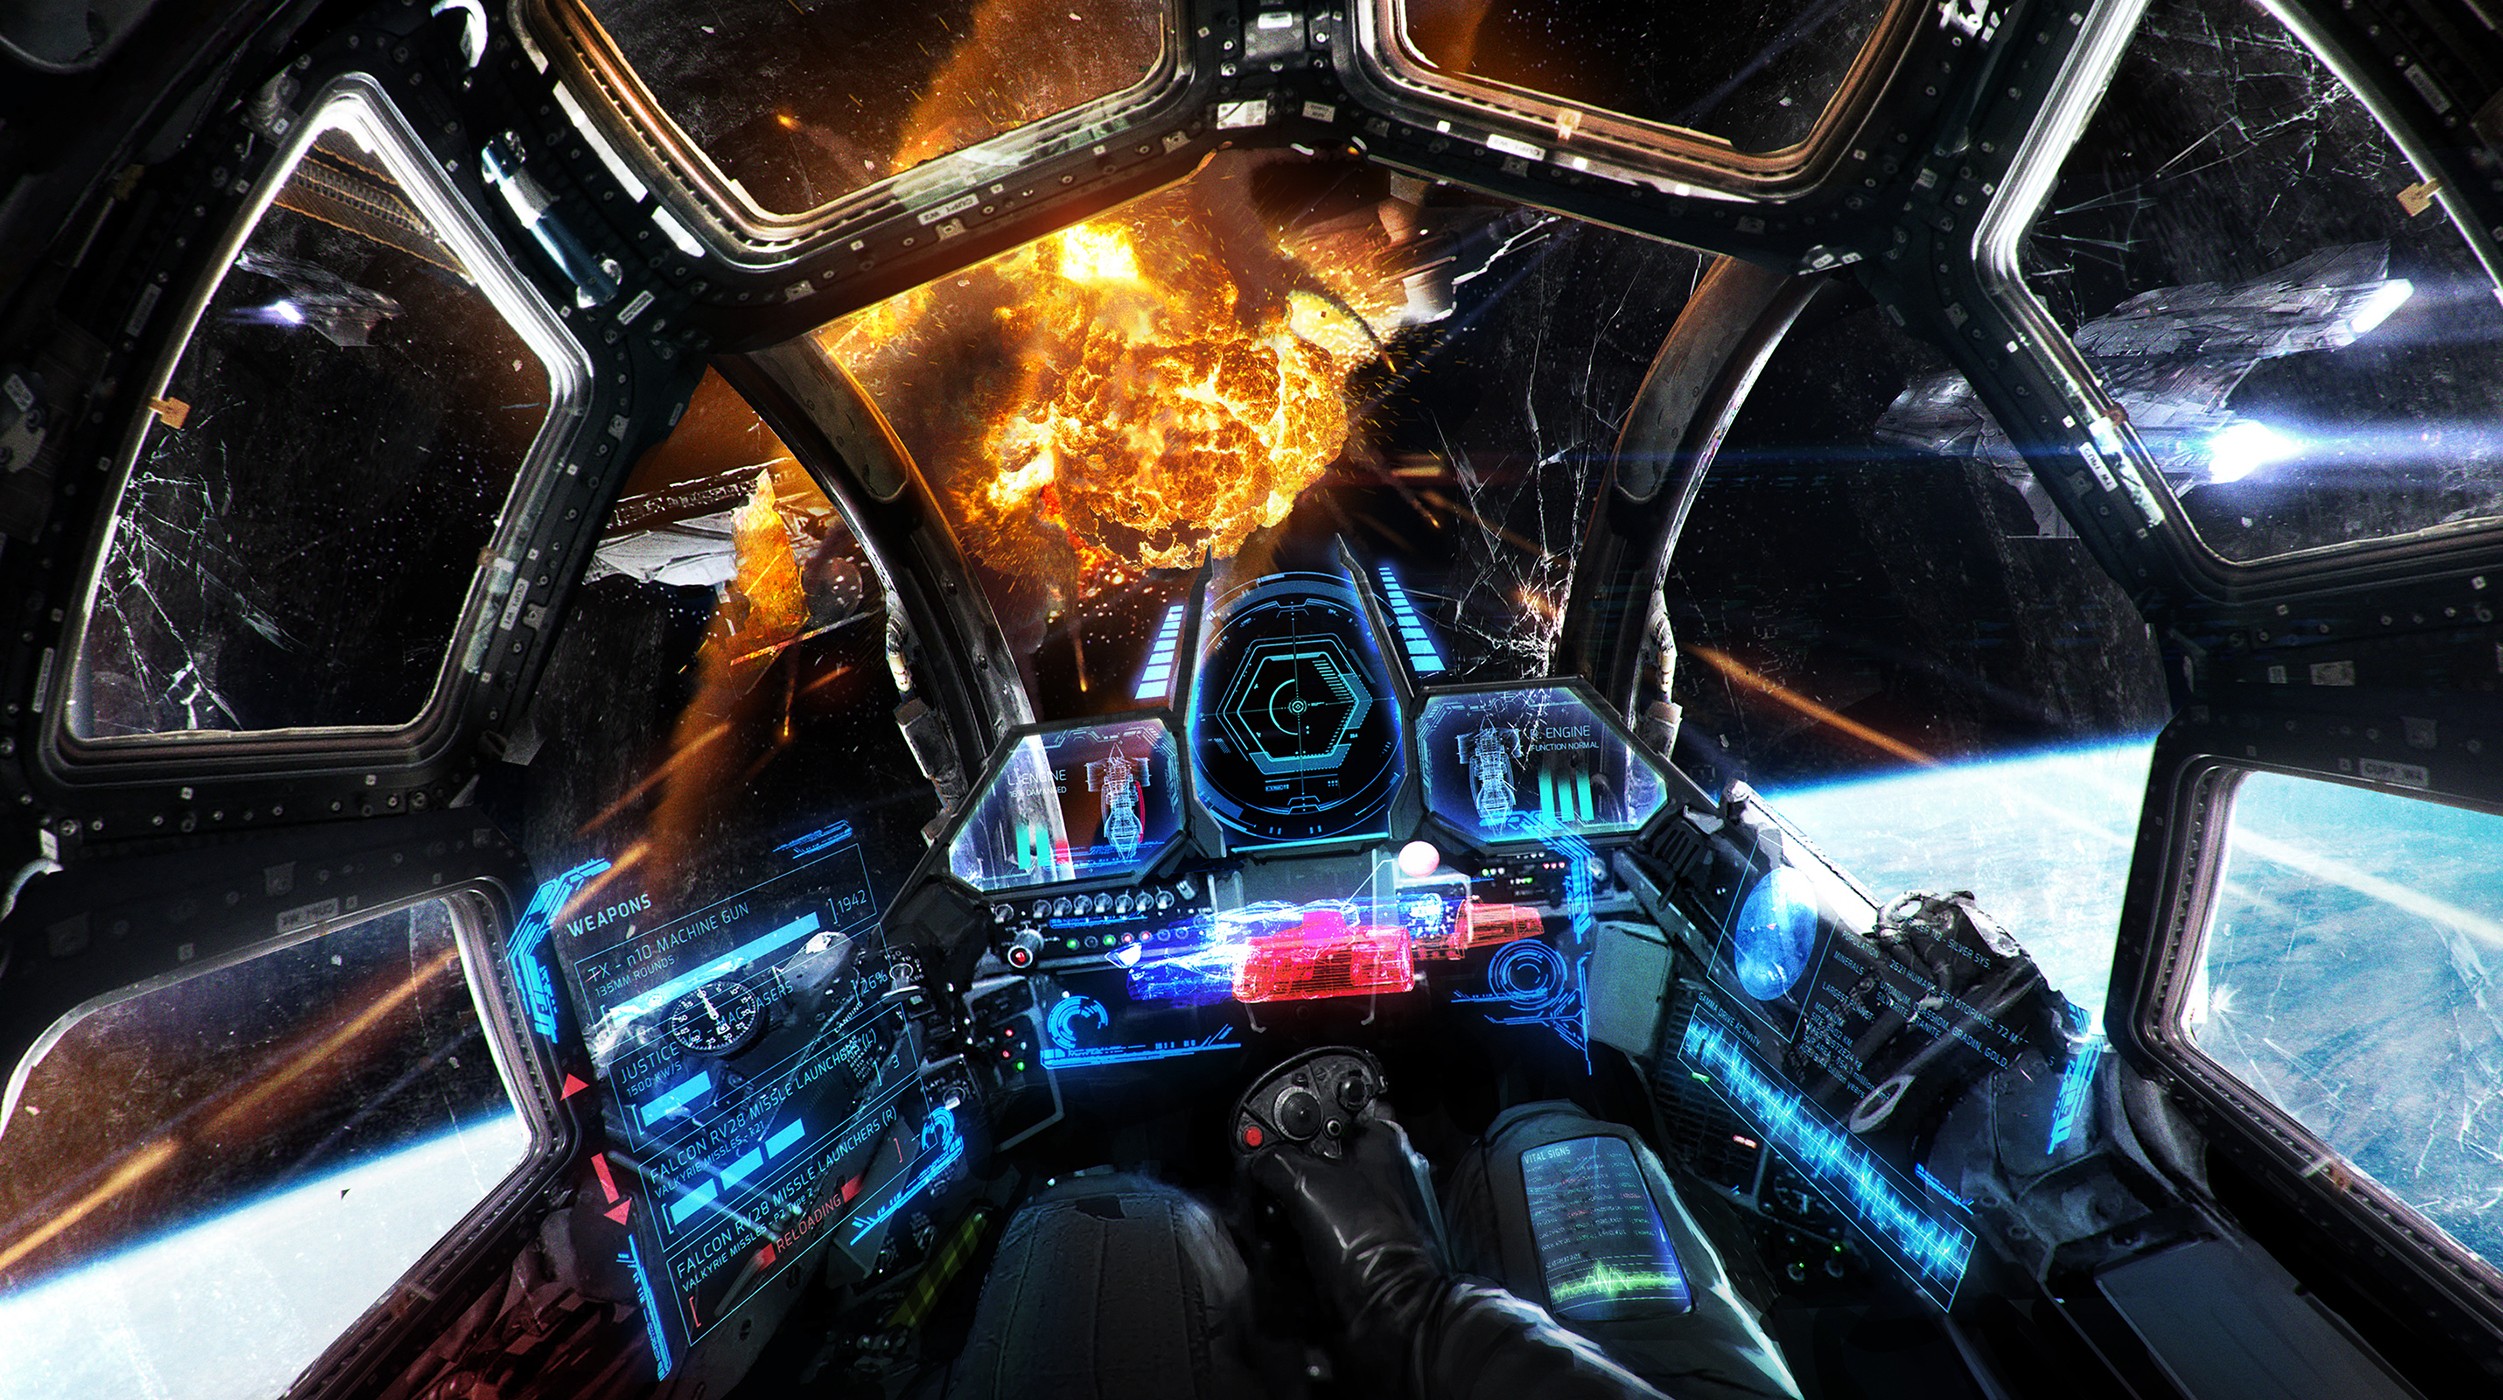 Artwork Science Fiction Space Spaceship HUD Explosion Digital Art War Cockpit 2503x1400